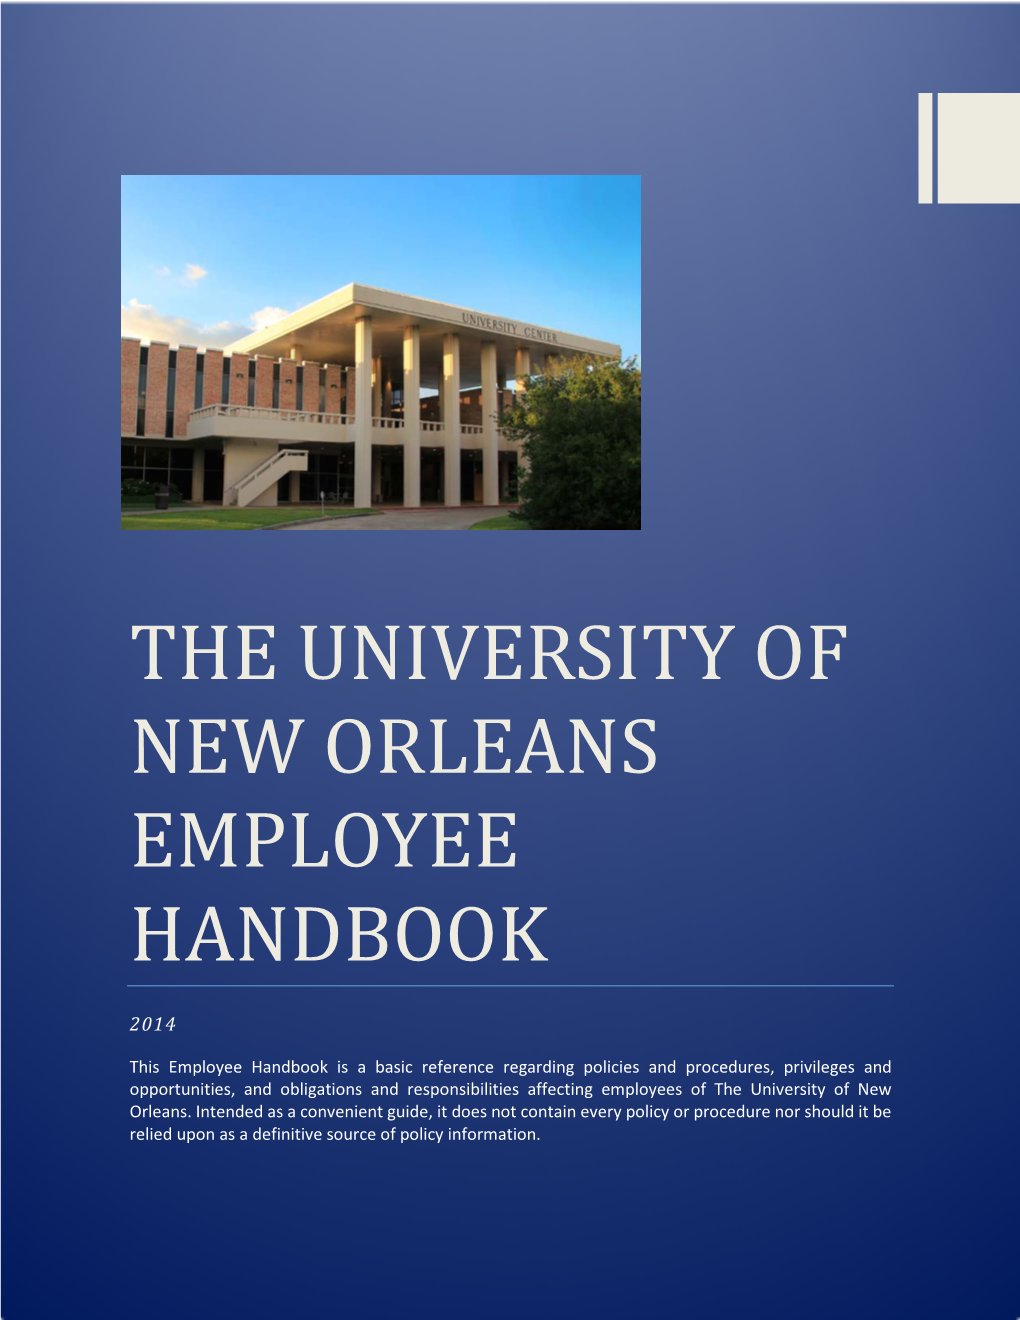 The University of New Orleans Employee Handbook